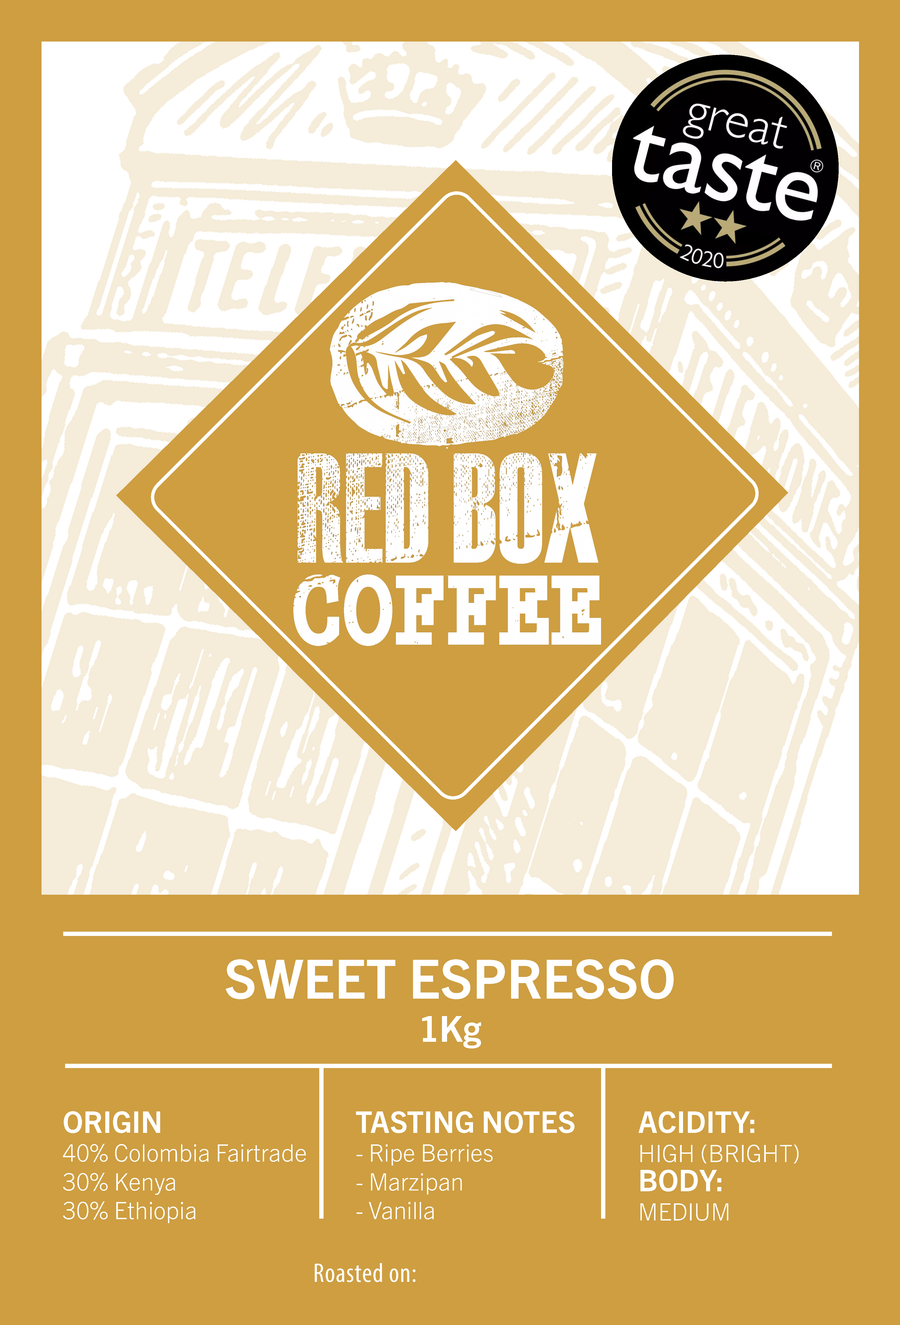 Red Box Sweet Espresso,  Great Taste 2-Star 2020 - WHOLE BEAN